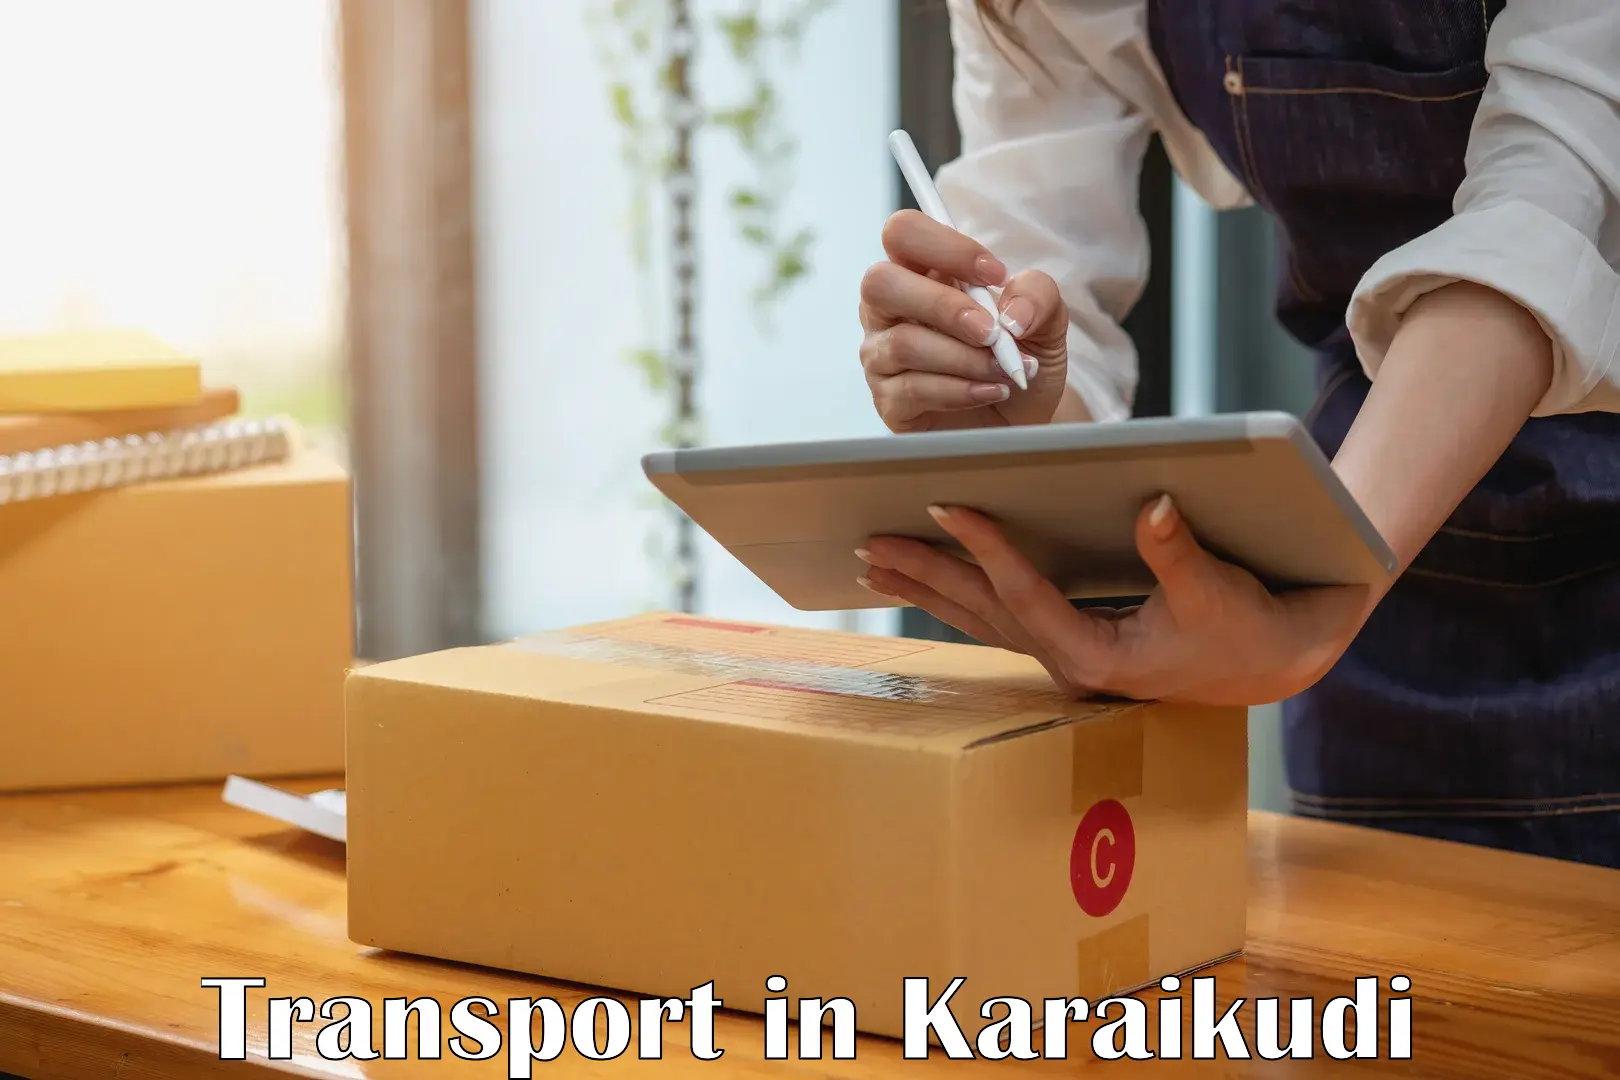 Road transport online services in Karaikudi